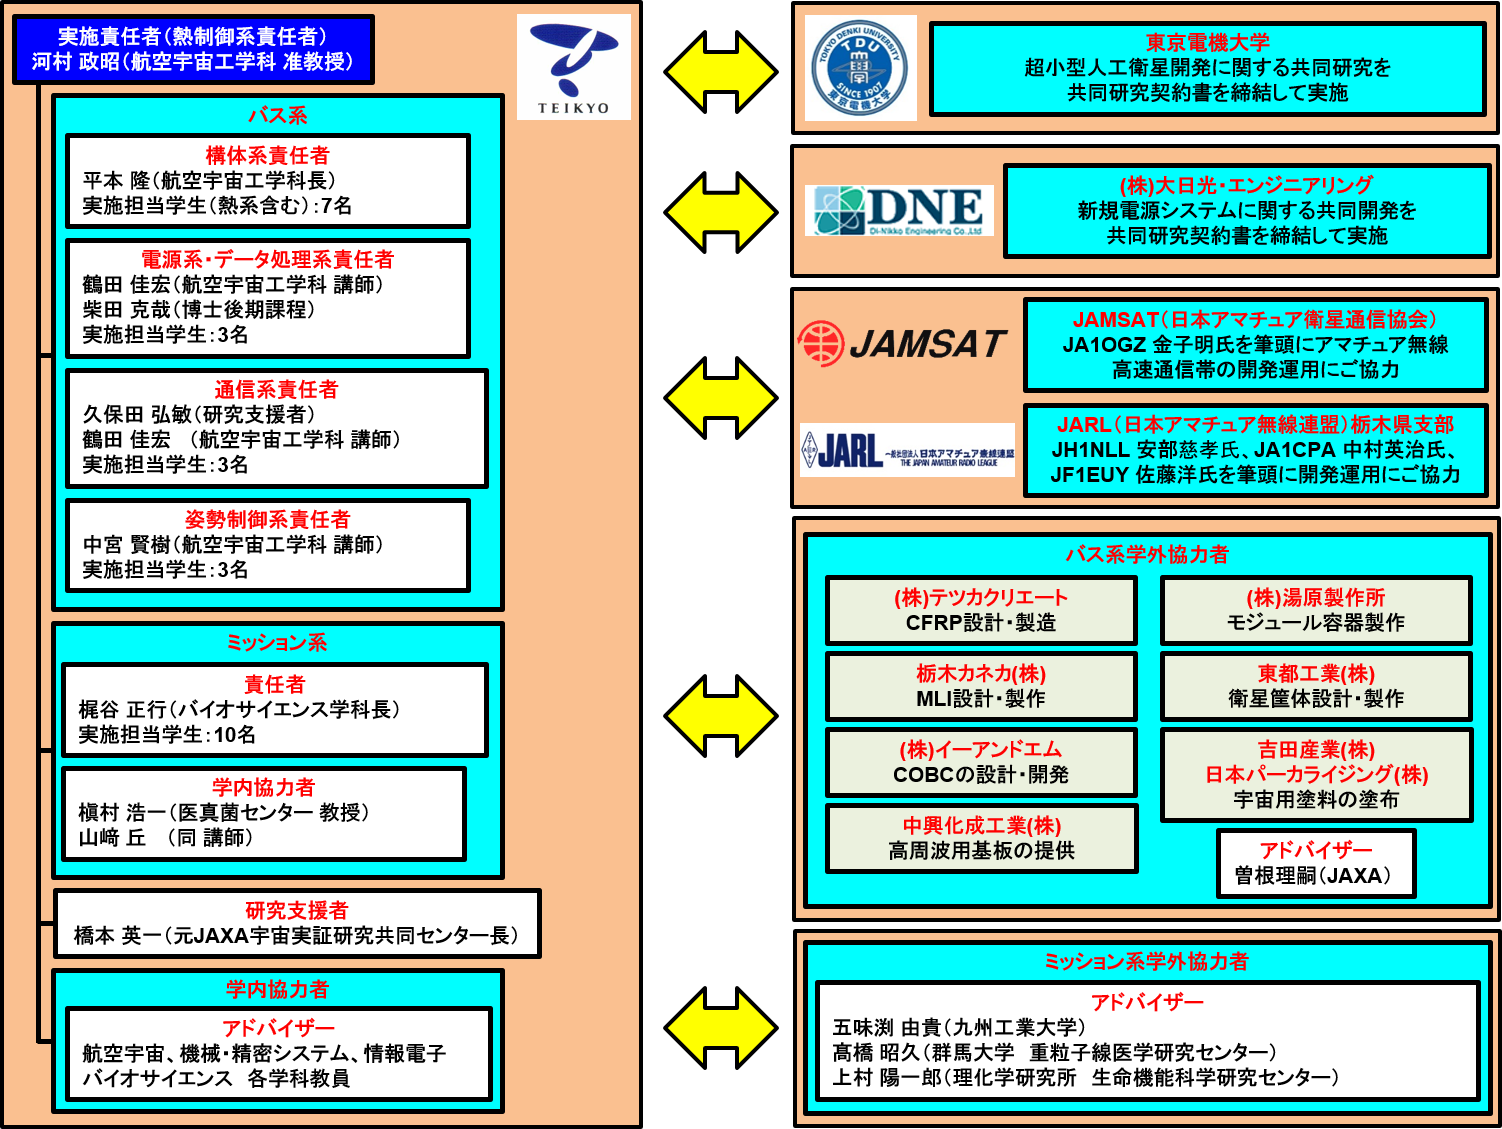 Development implementation system of "TeikyoSat-3"